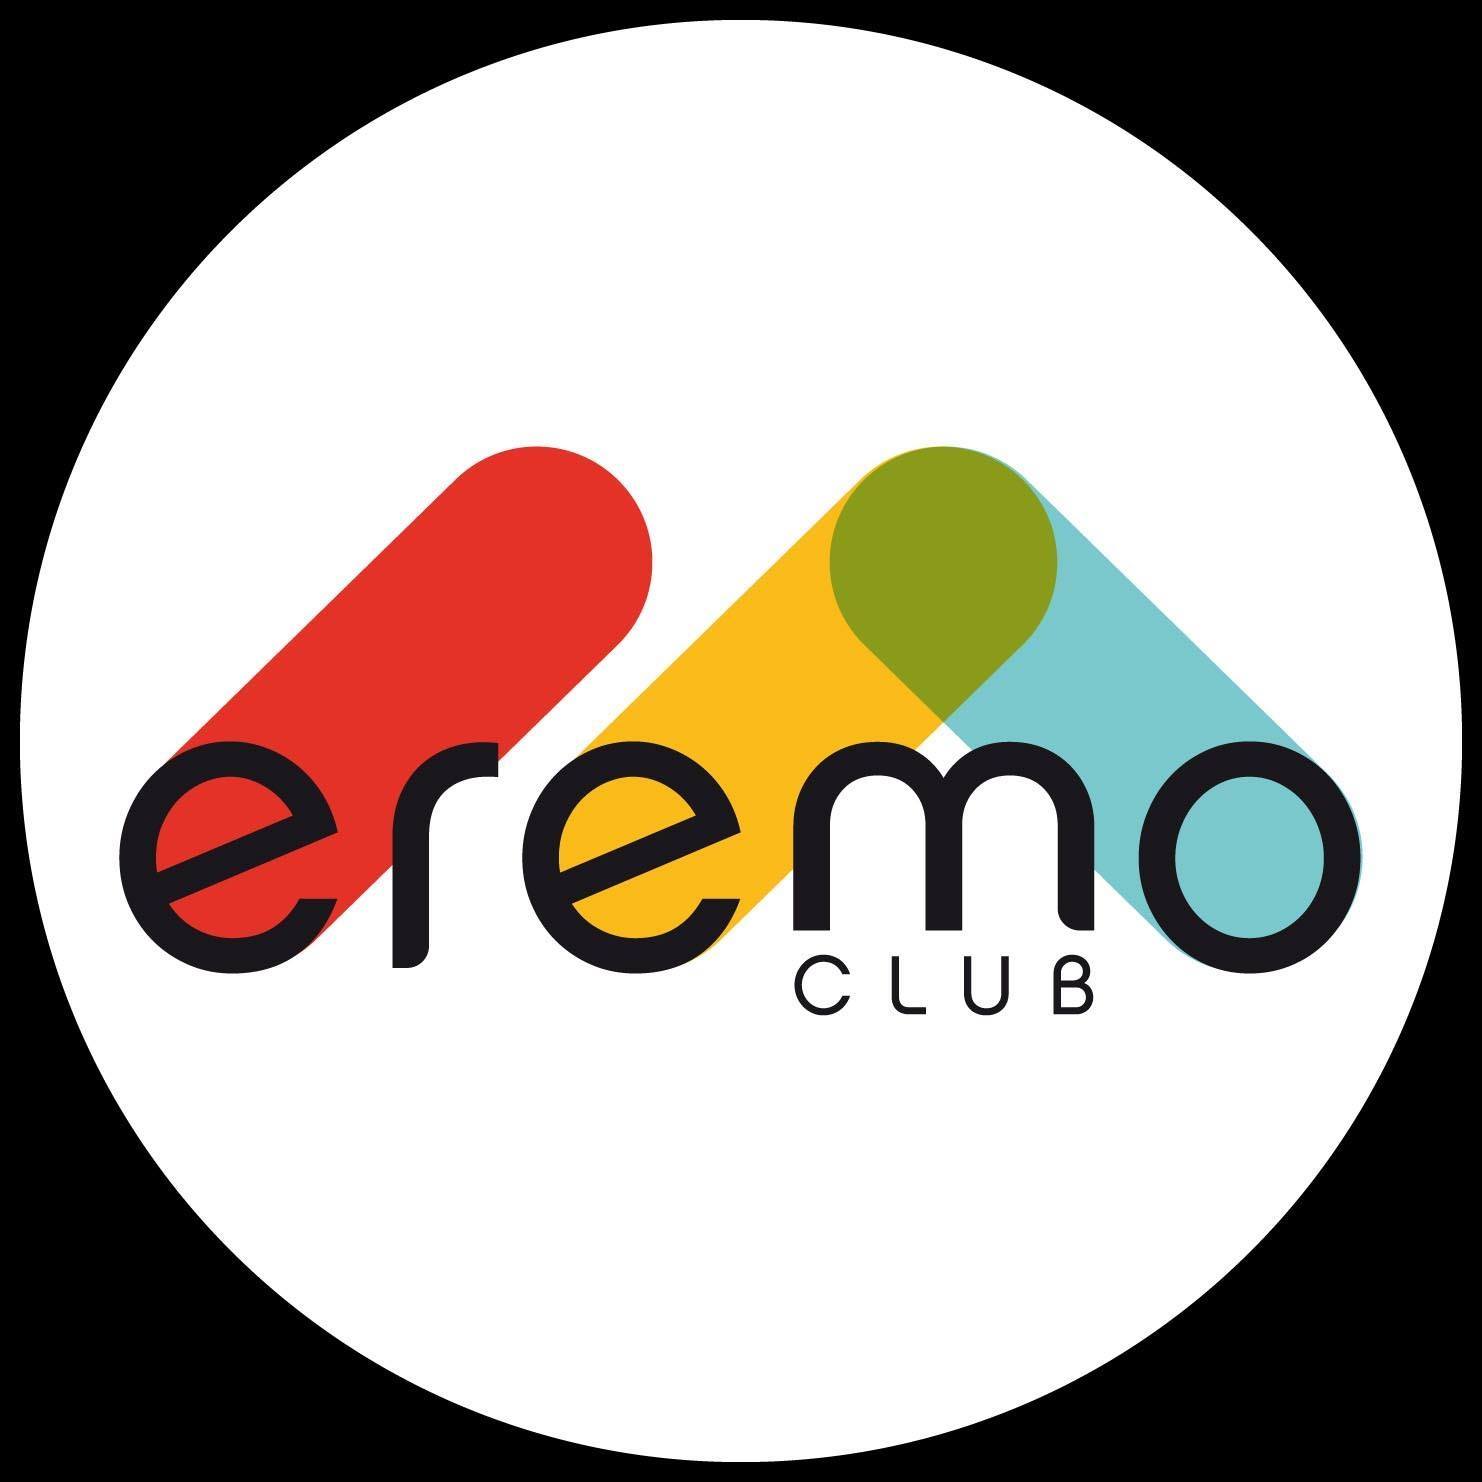 Eremo Club Tickets